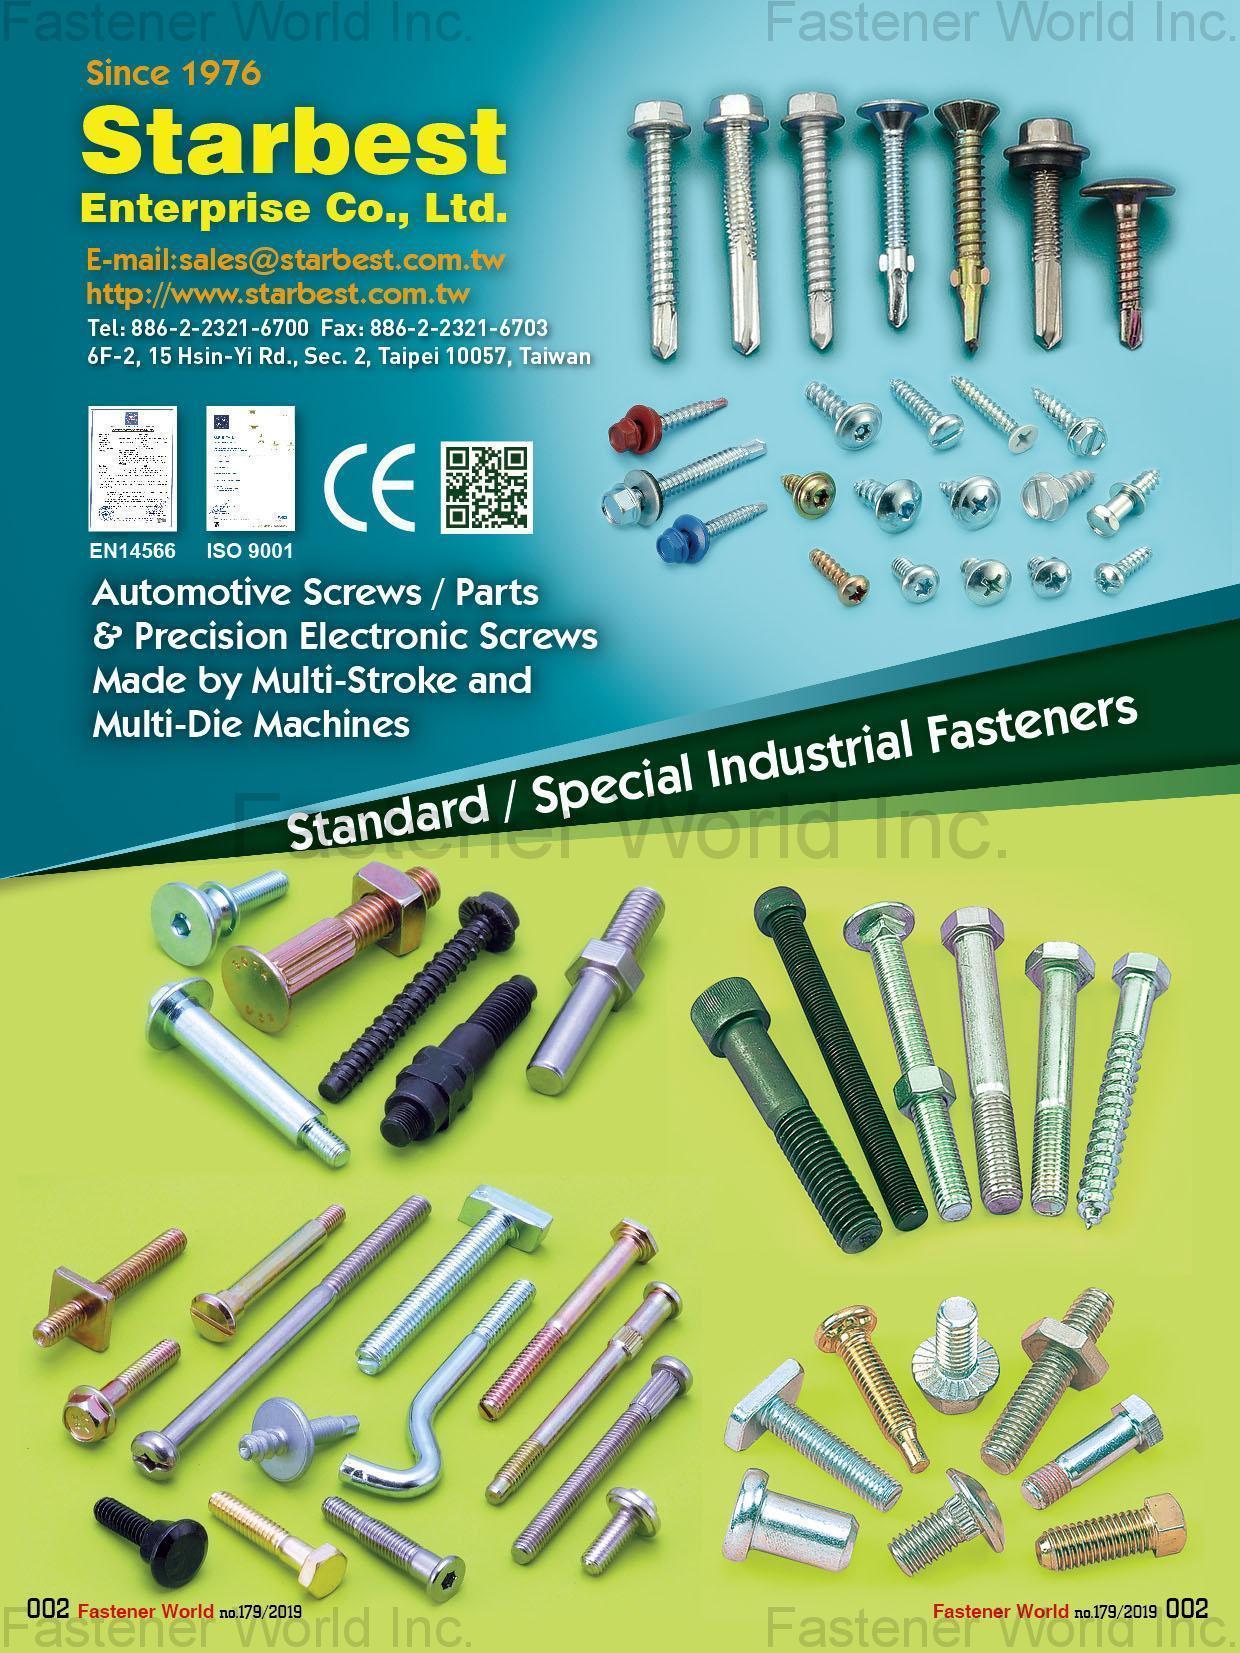 STARBEST ENTERPRISE CO., LTD.  , Automotive Screws / Parts & Precision Electronic Screws, Standard / Special Industrial Fasteners , Automotive Screws